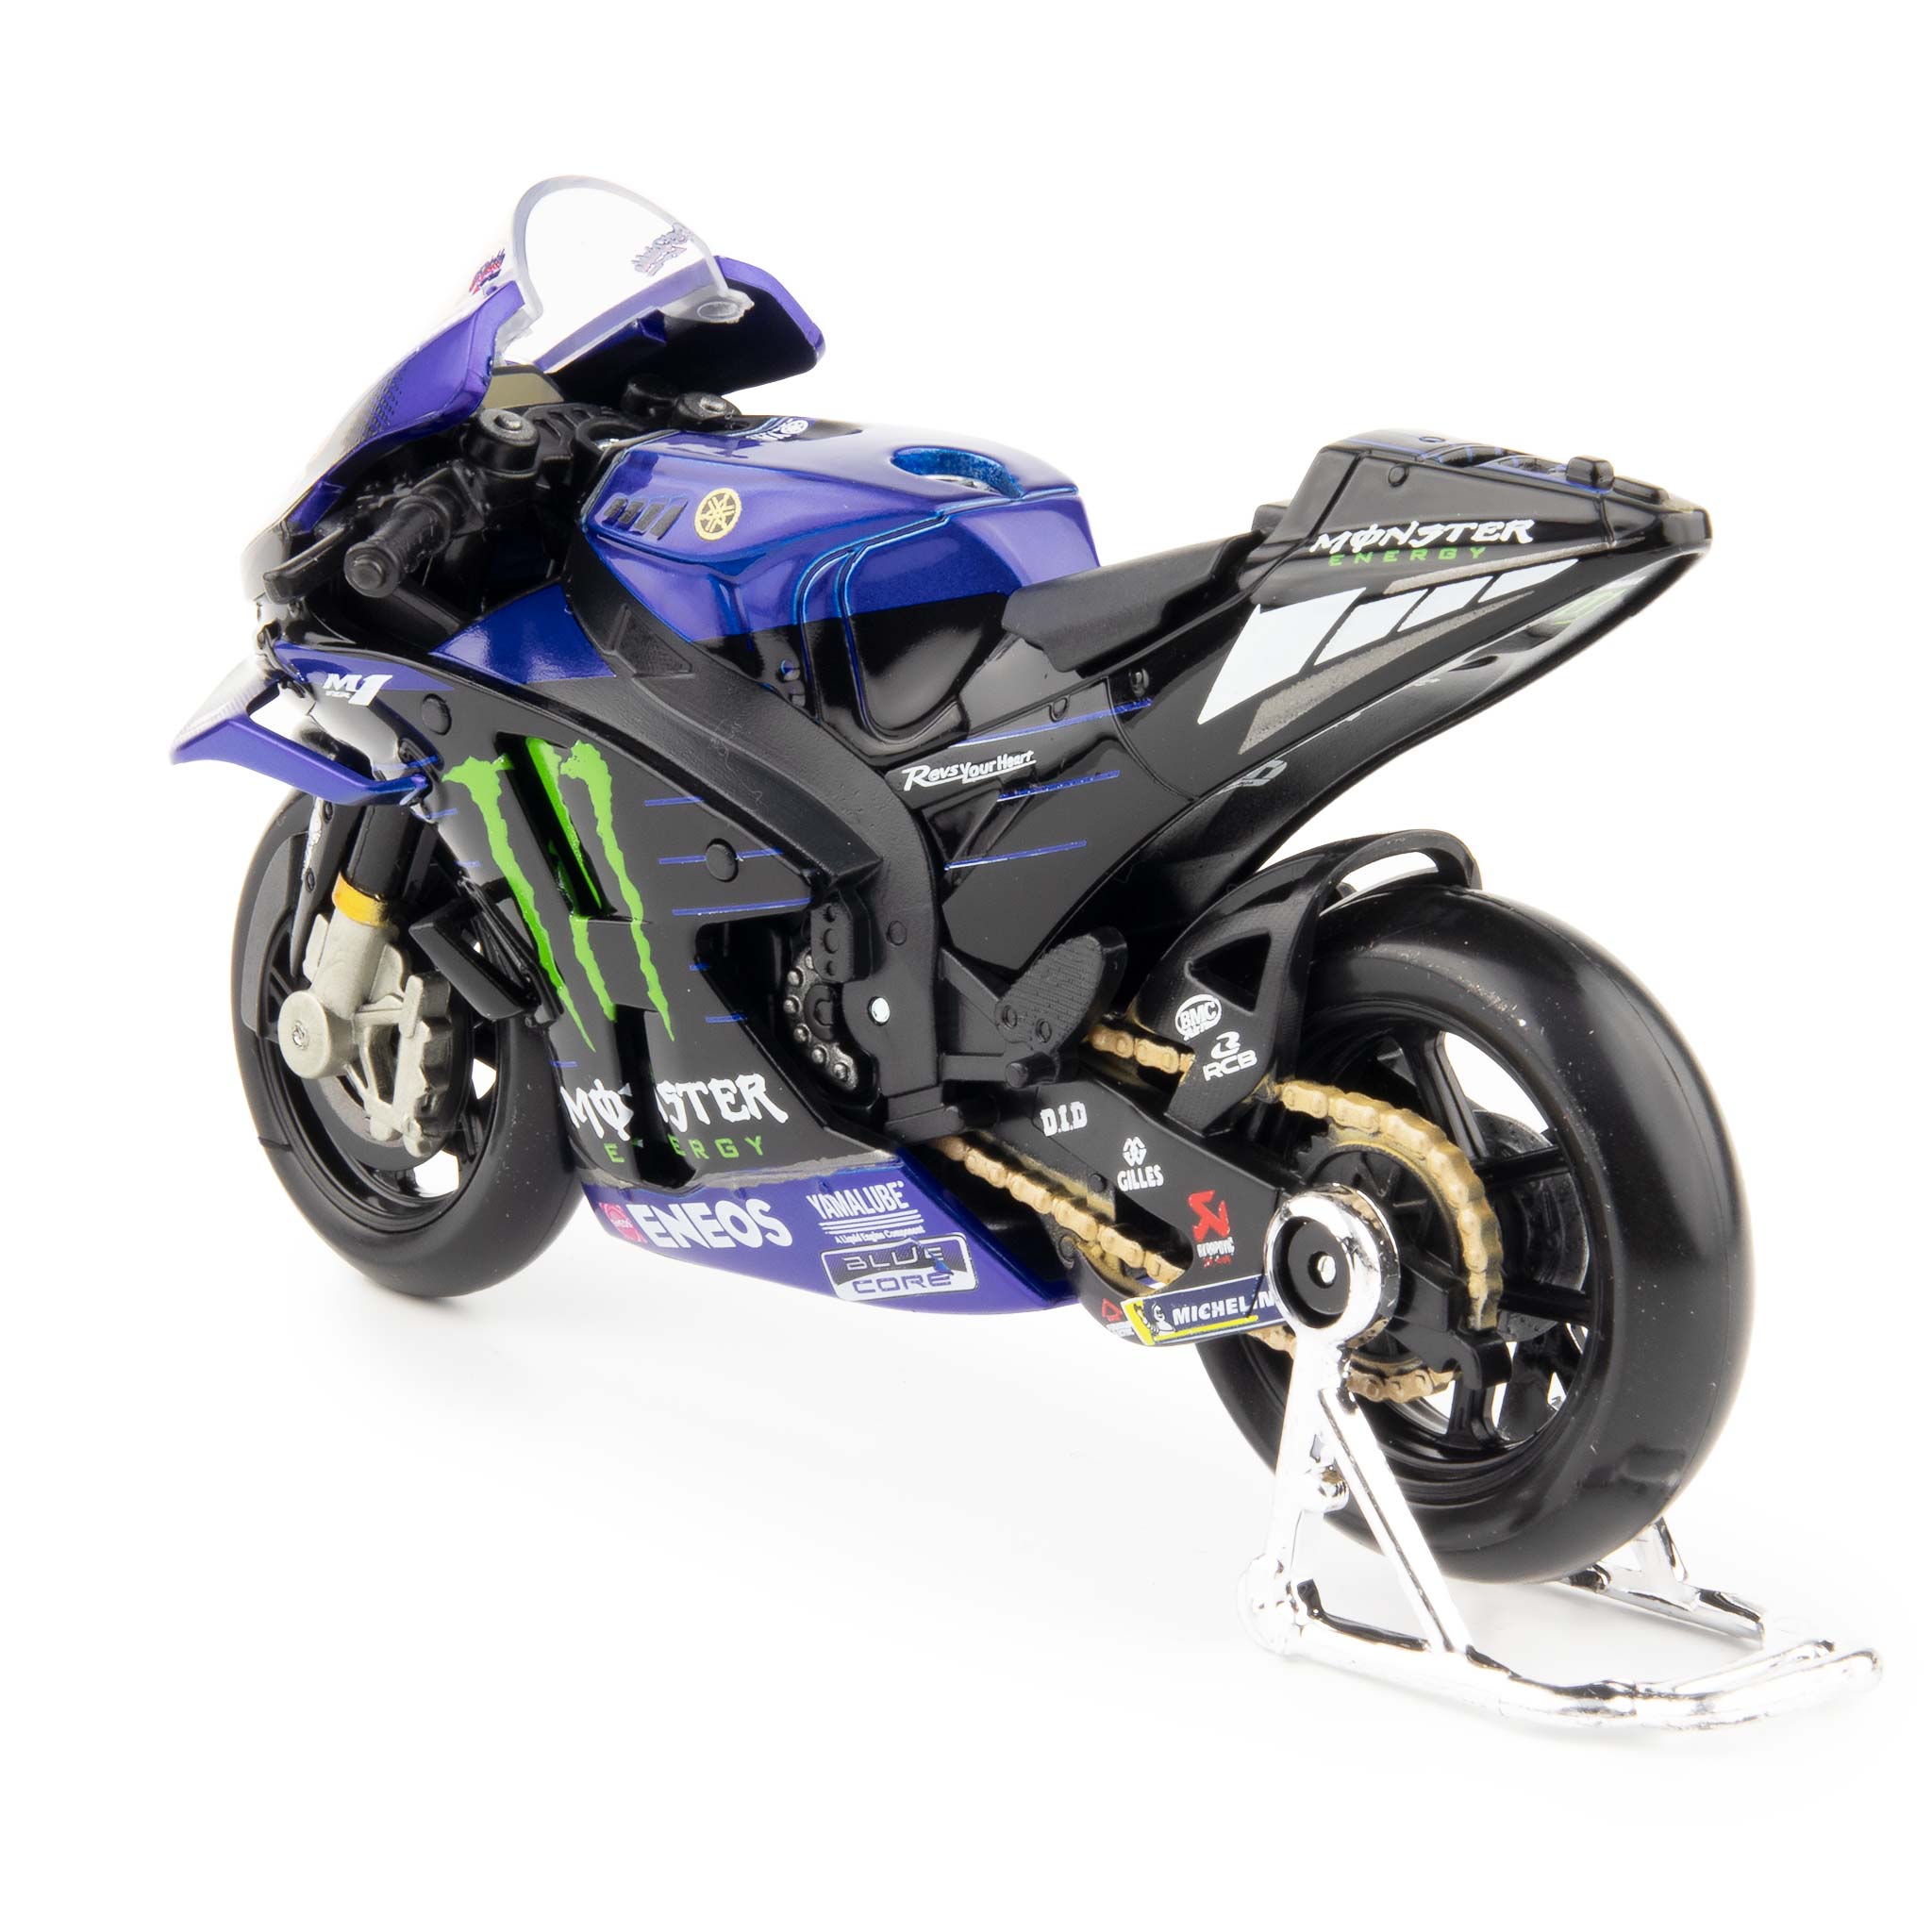 Yamaha YZR-M1 Monster #20 MotoGP 2021 Quartararo - 1:18 Scale Diecast Model Motorcycle-Maisto-Diecast Model Centre